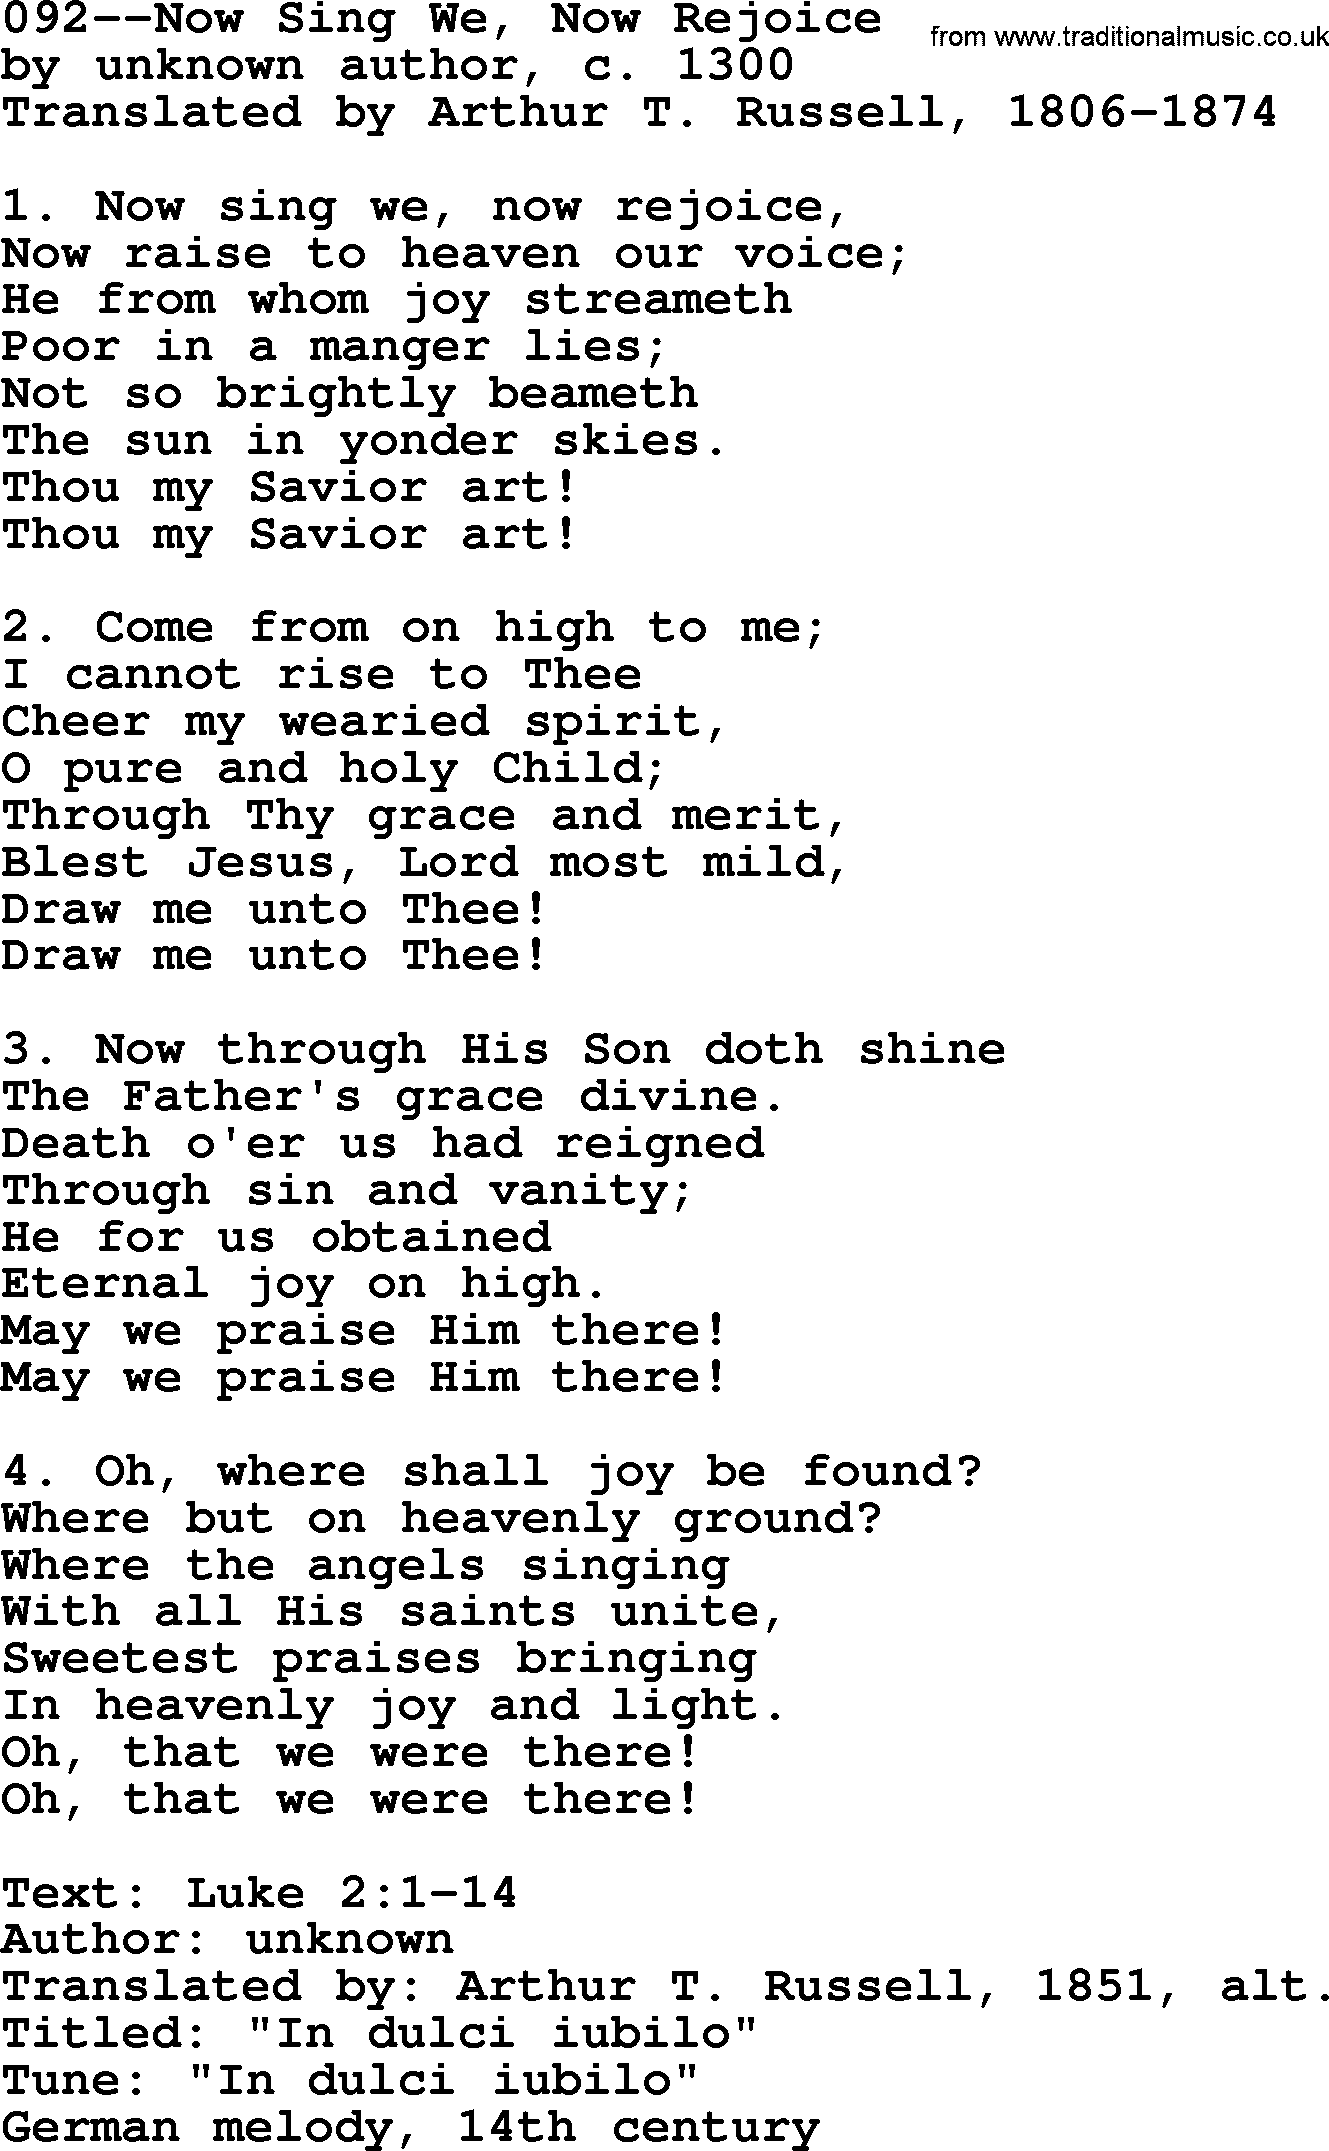 Lutheran Hymn: 092--Now Sing We, Now Rejoice.txt lyrics with PDF